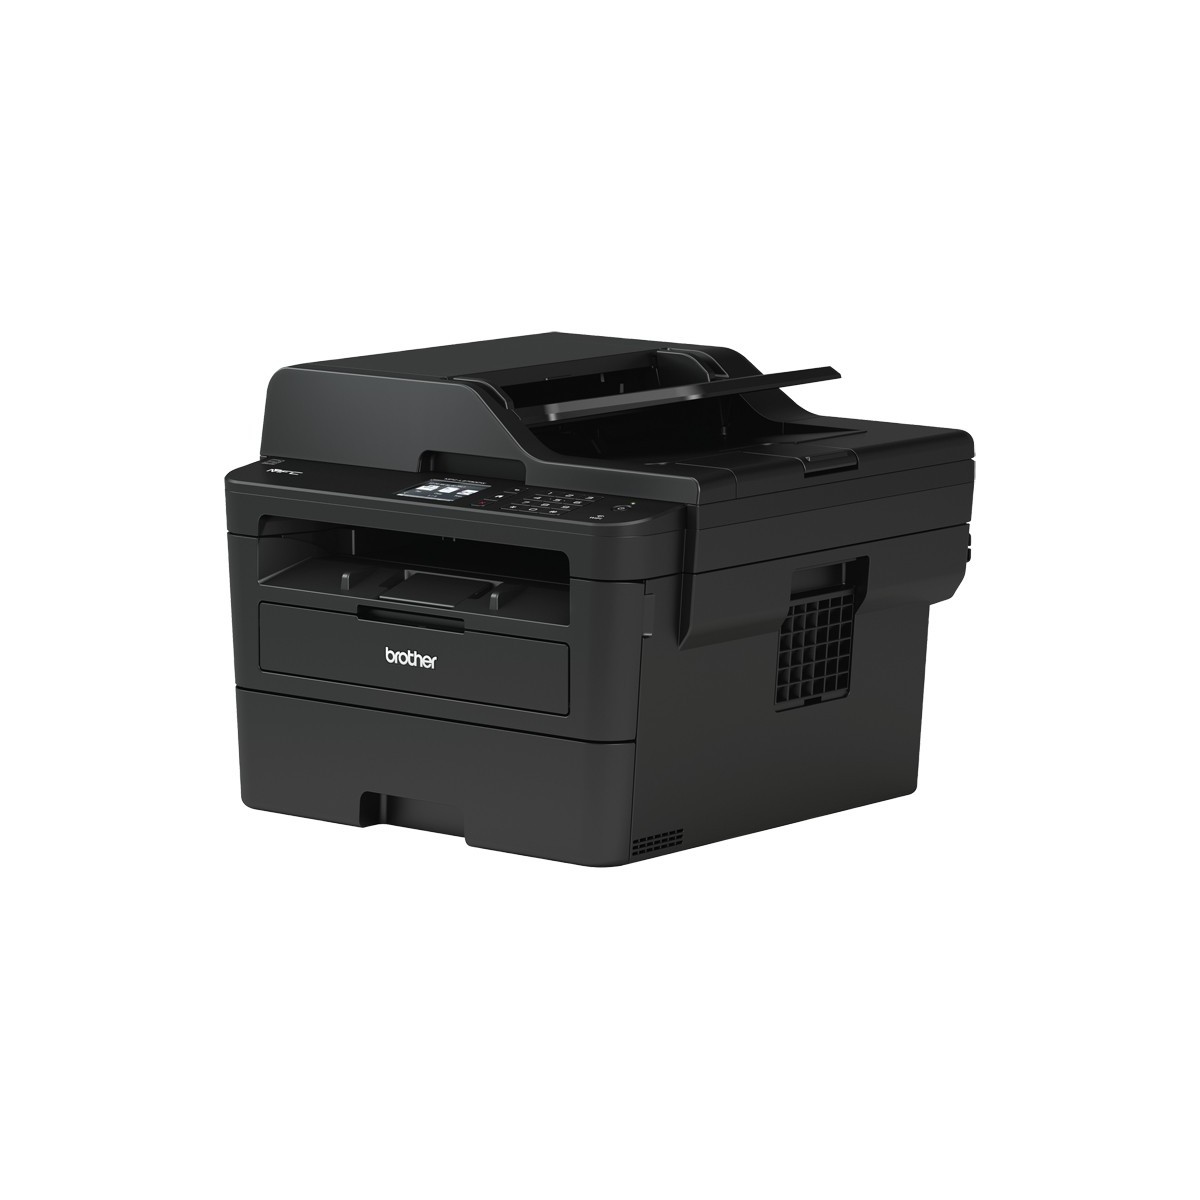 Brother MFC-L2730DW - Multifunktionsdrucker - s/w - Laser - Legal 216 x 356 - Fax - Laser/Led